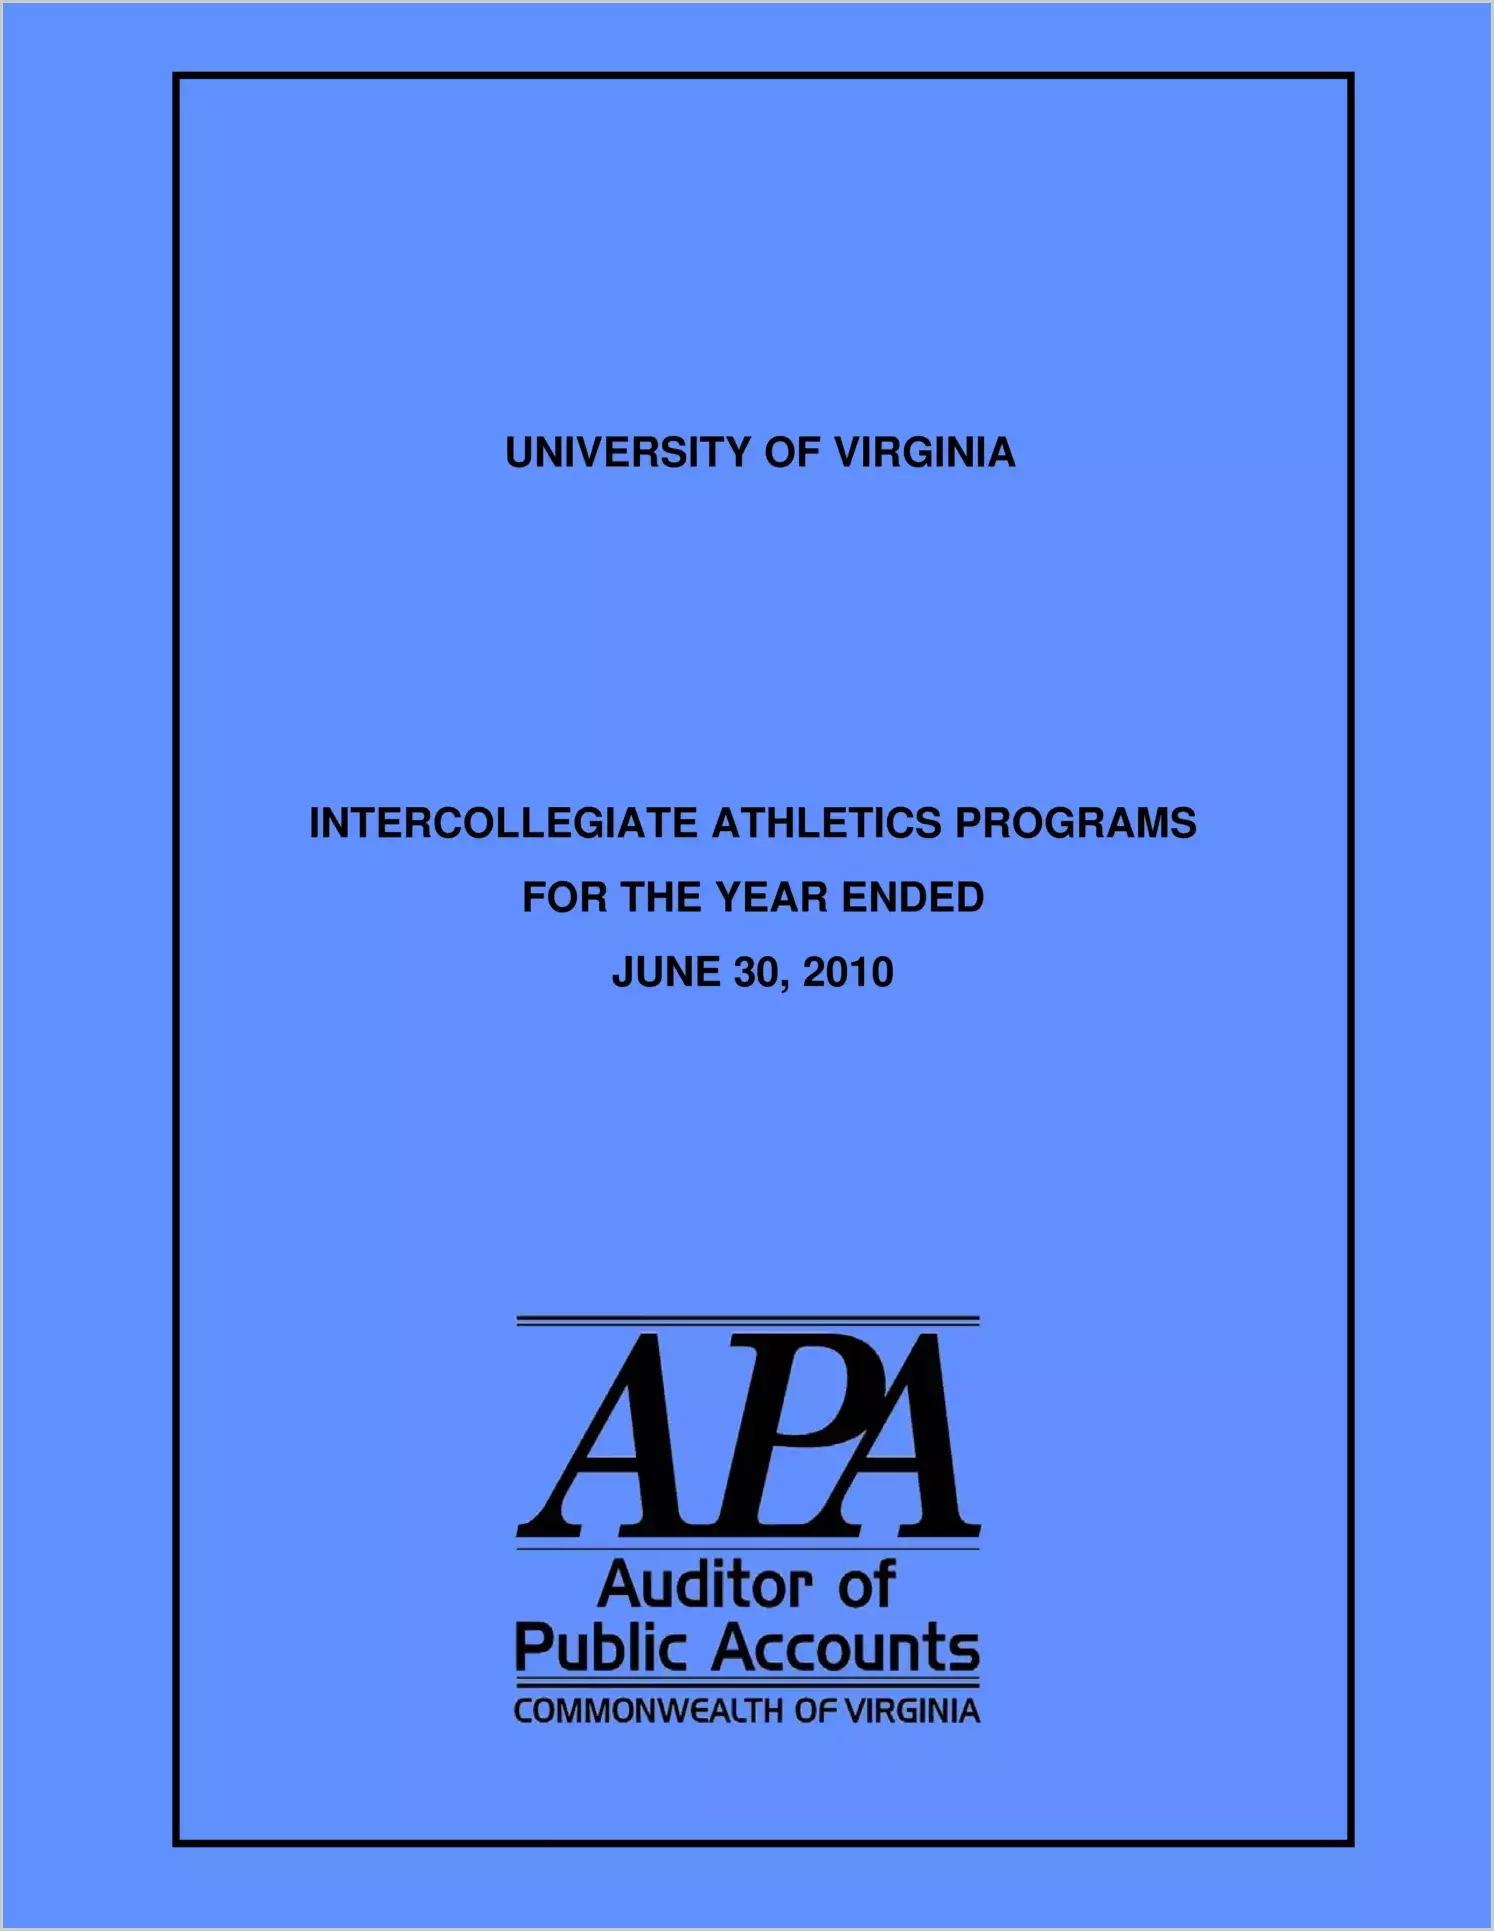 University of Virginia Intercollegiate Athletics Programs for the year ended June 30, 2010